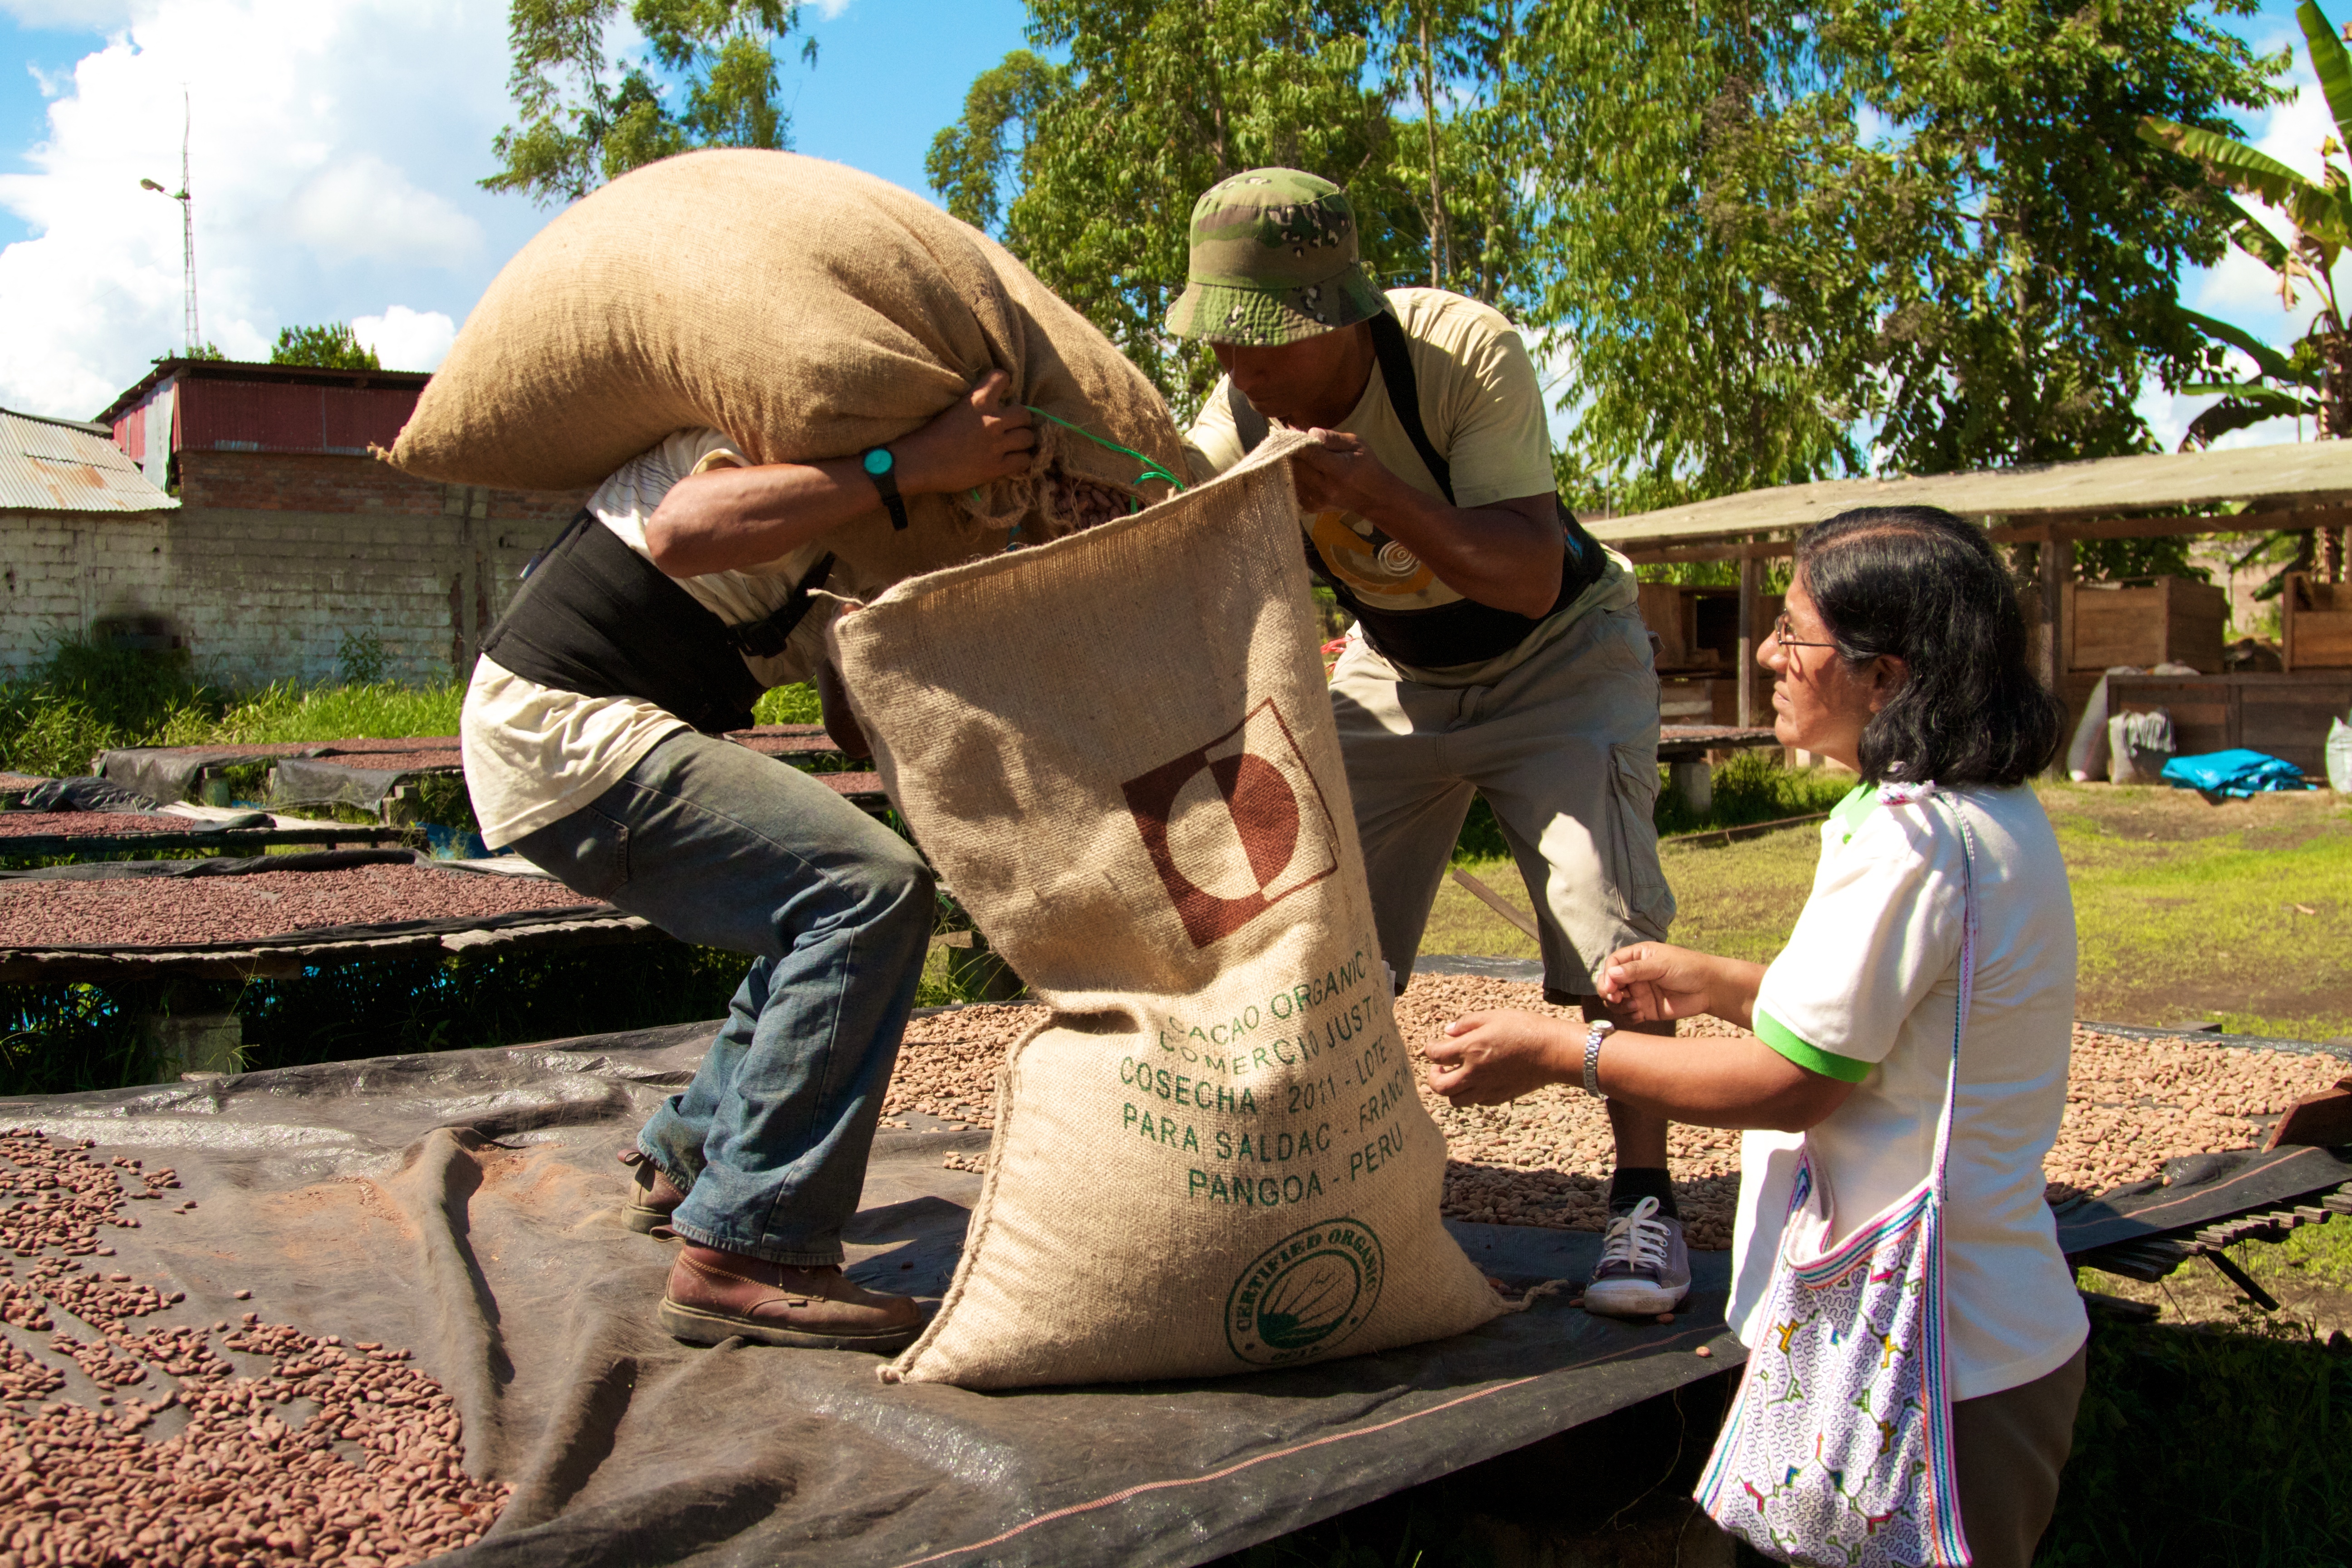 Esperanza supervises Pangoa employees preparing sacks of dried cacao.